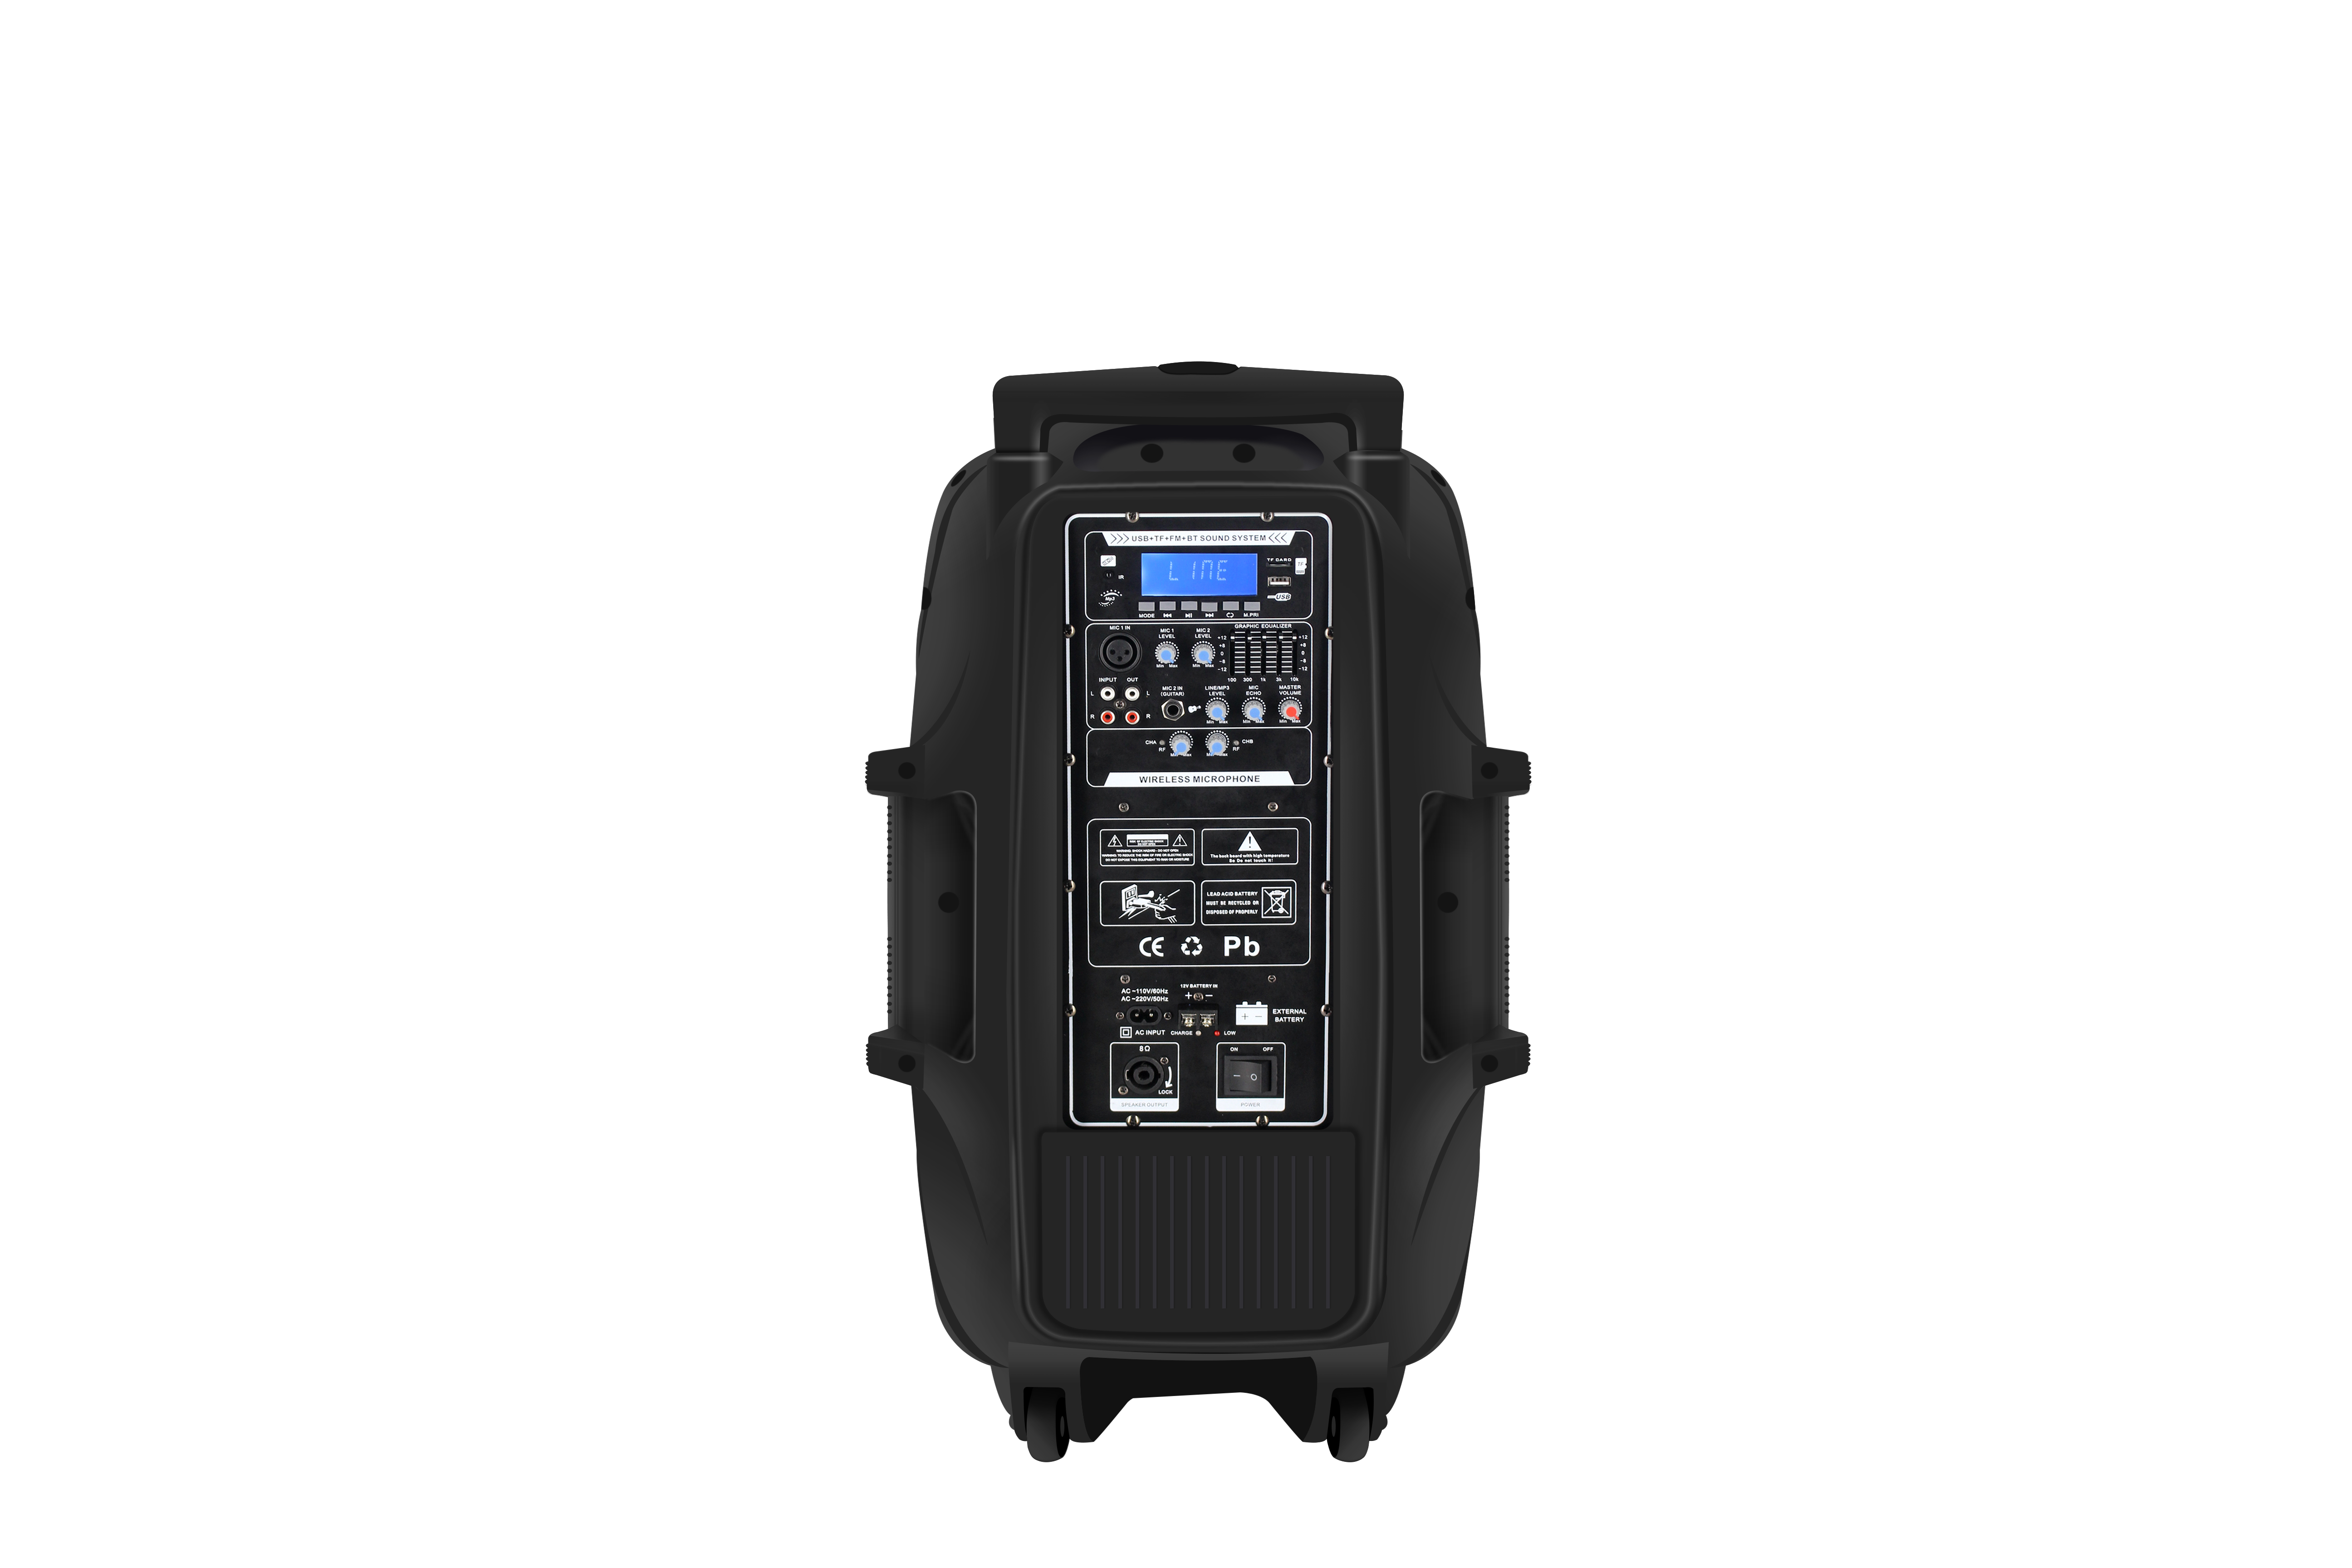 EQ Altavoces y subwoofers Bluetooths de 15 pulgadas para exteriores